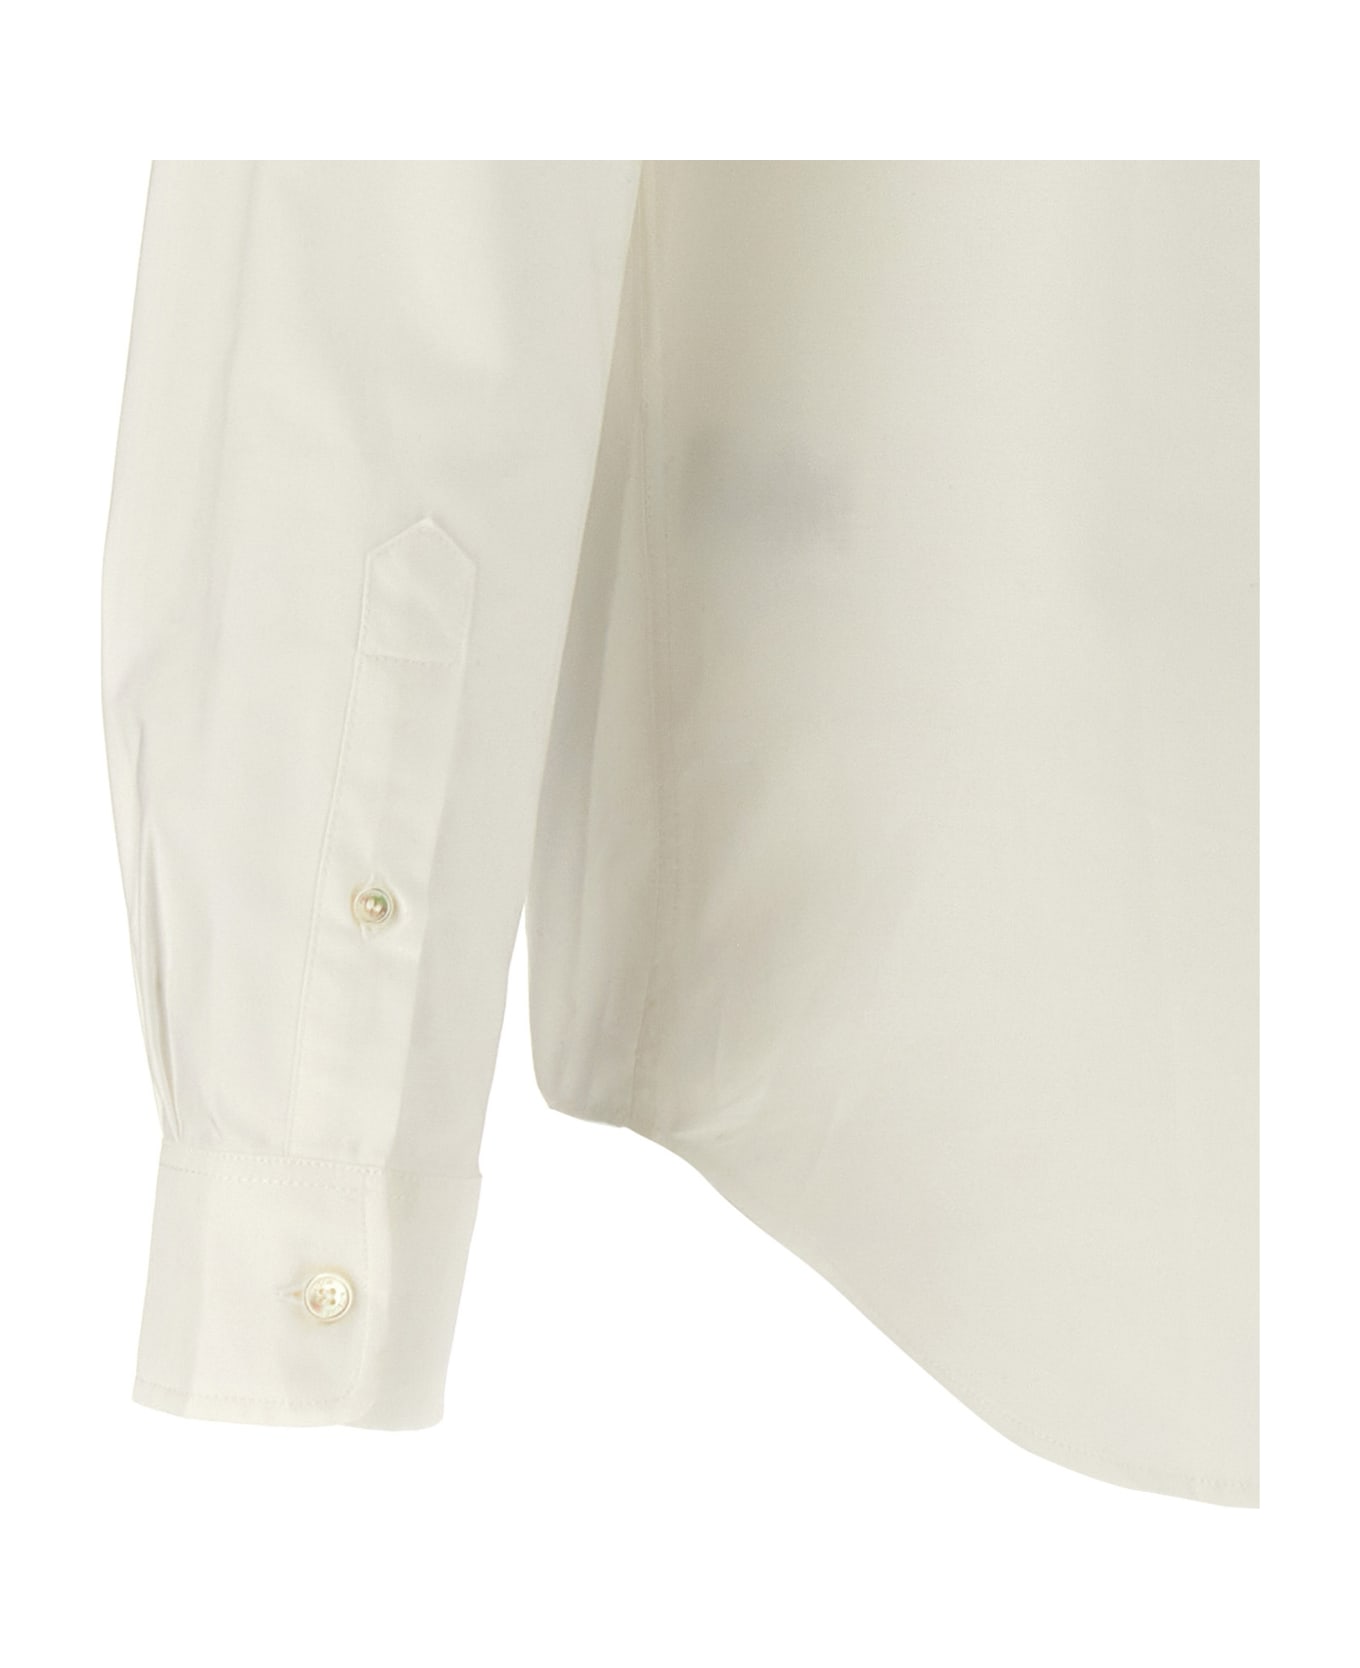 Maison Kitsuné 'mini Fox Head Classic' Shirt - White シャツ